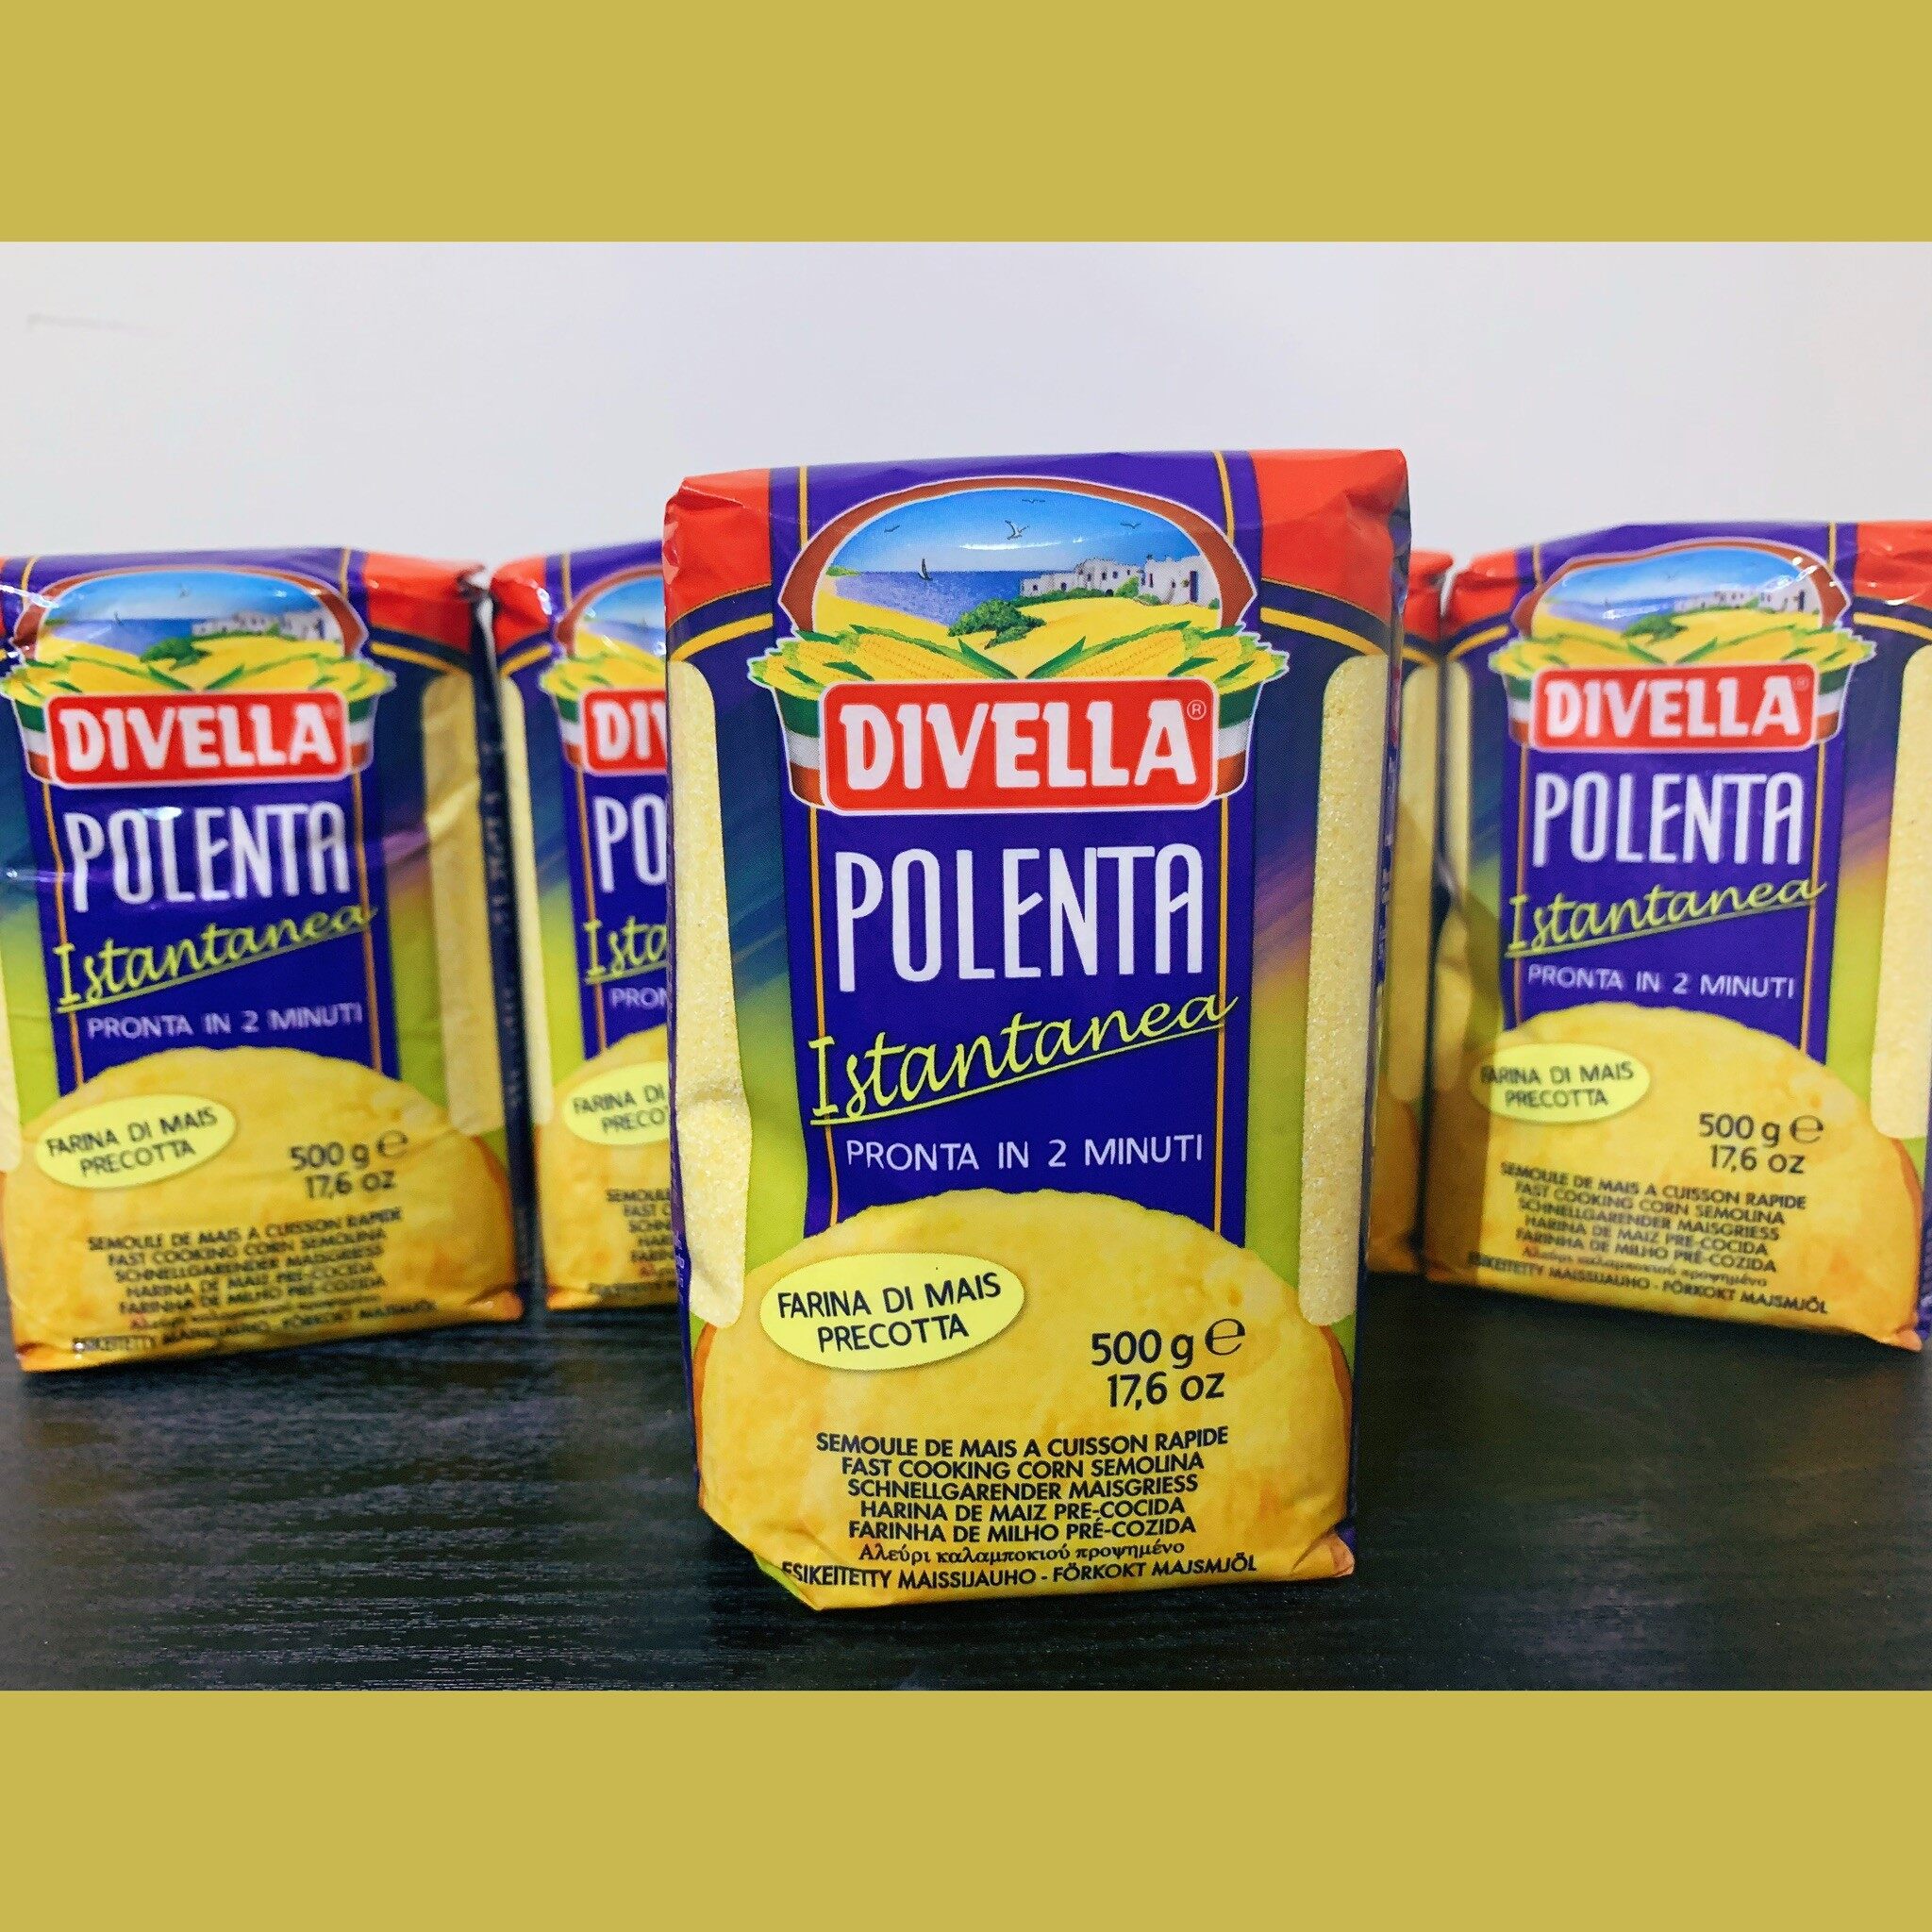 Divella polenta istantanea 500g. โพเลนต้า (แป้งข้าวโพด) ตราดีเวลล่า 500กรัม